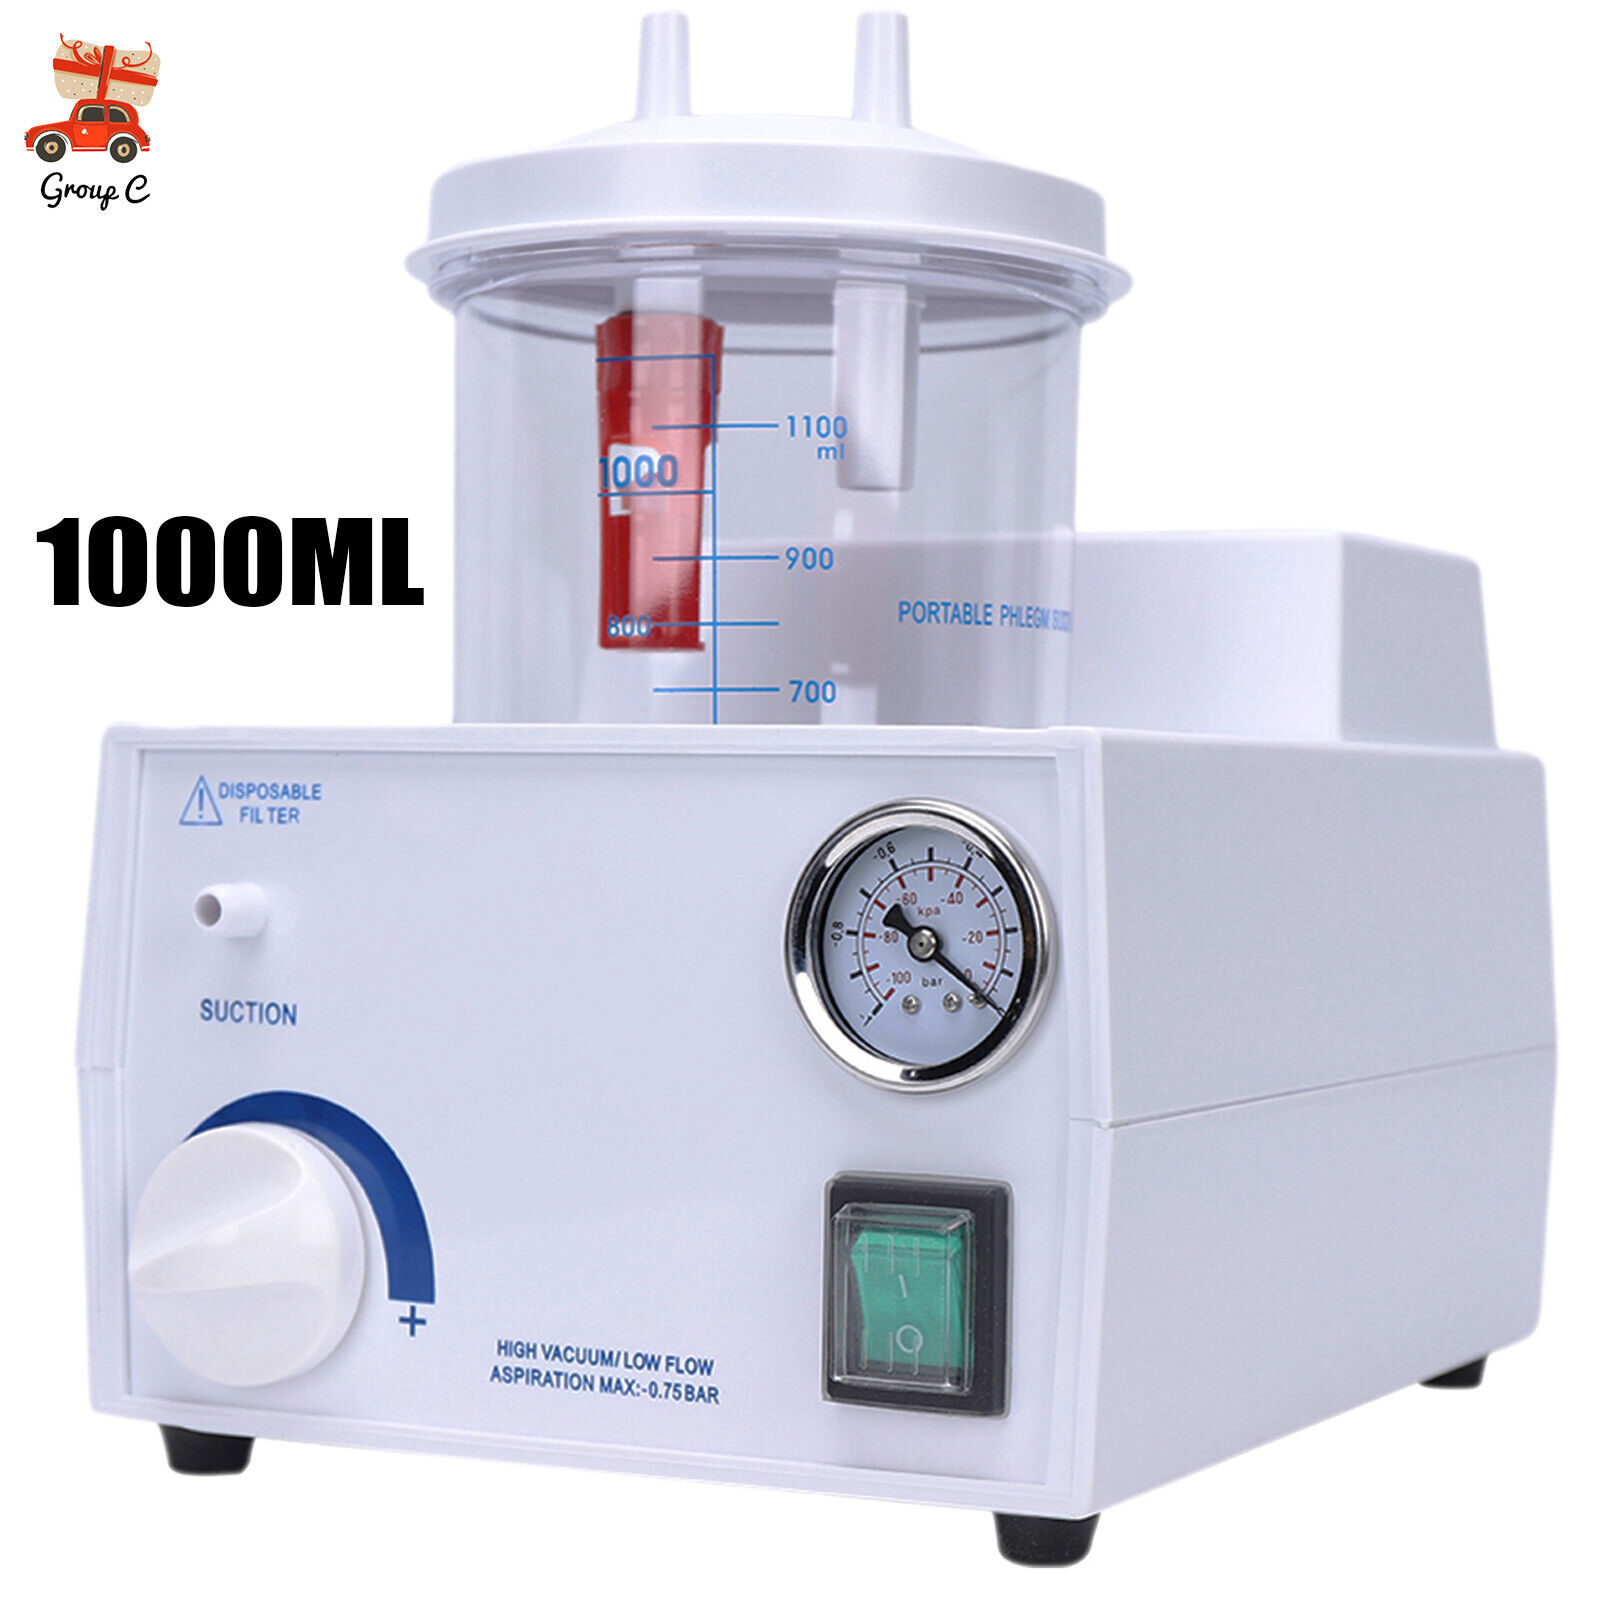 Portable Emergency Vacuum Phlegm Medical Aspirator Machine Suction Unit 1000ml